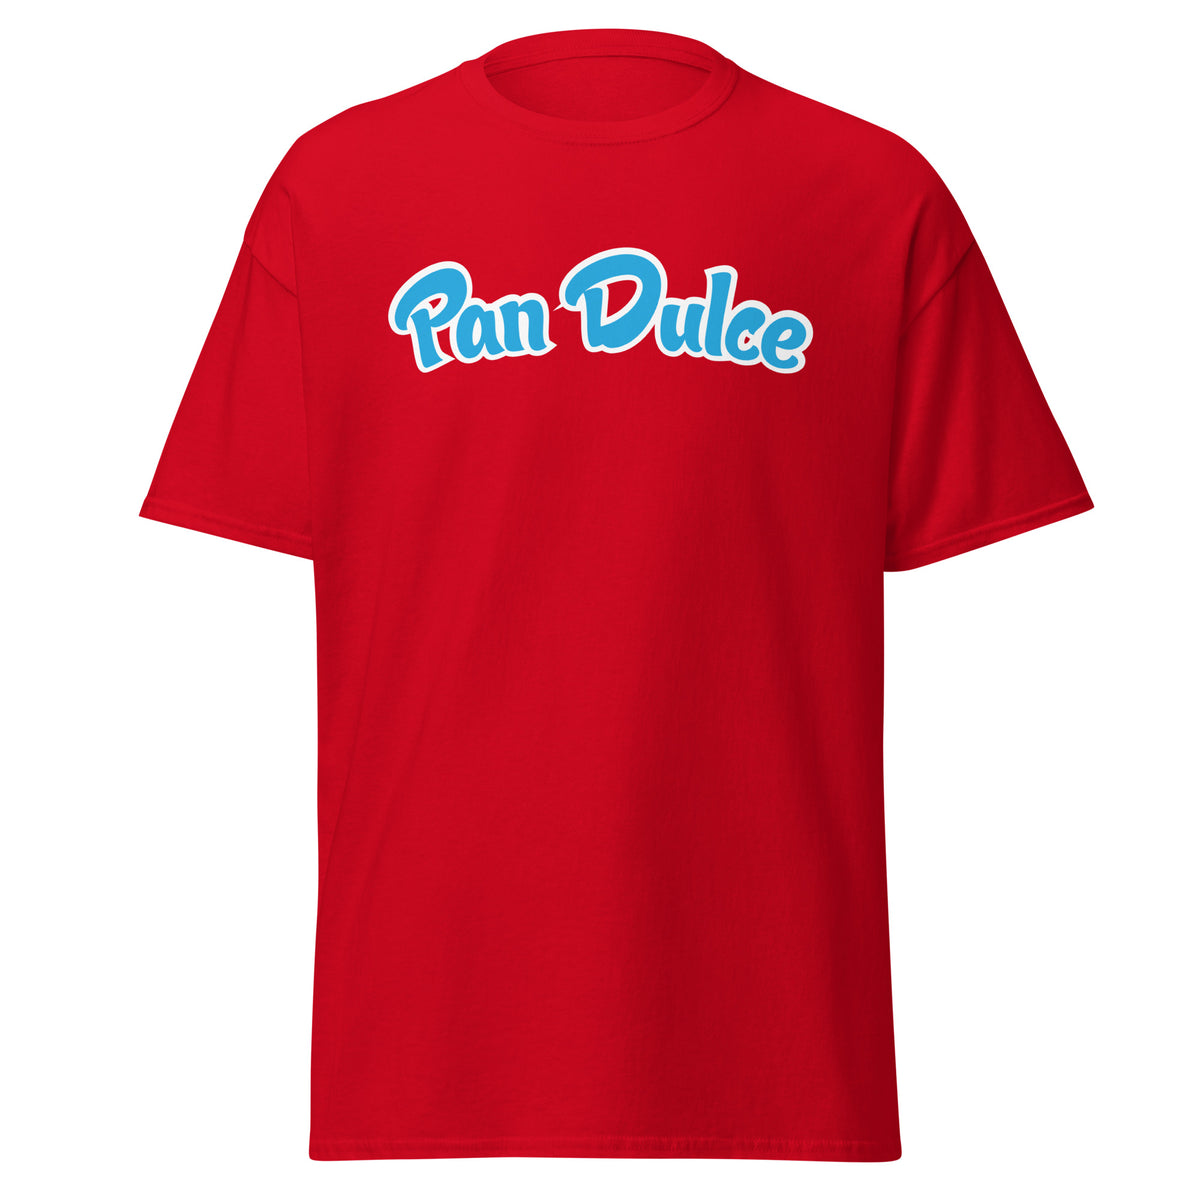 Pan Dulce T-Shirt (Sweet Bread)